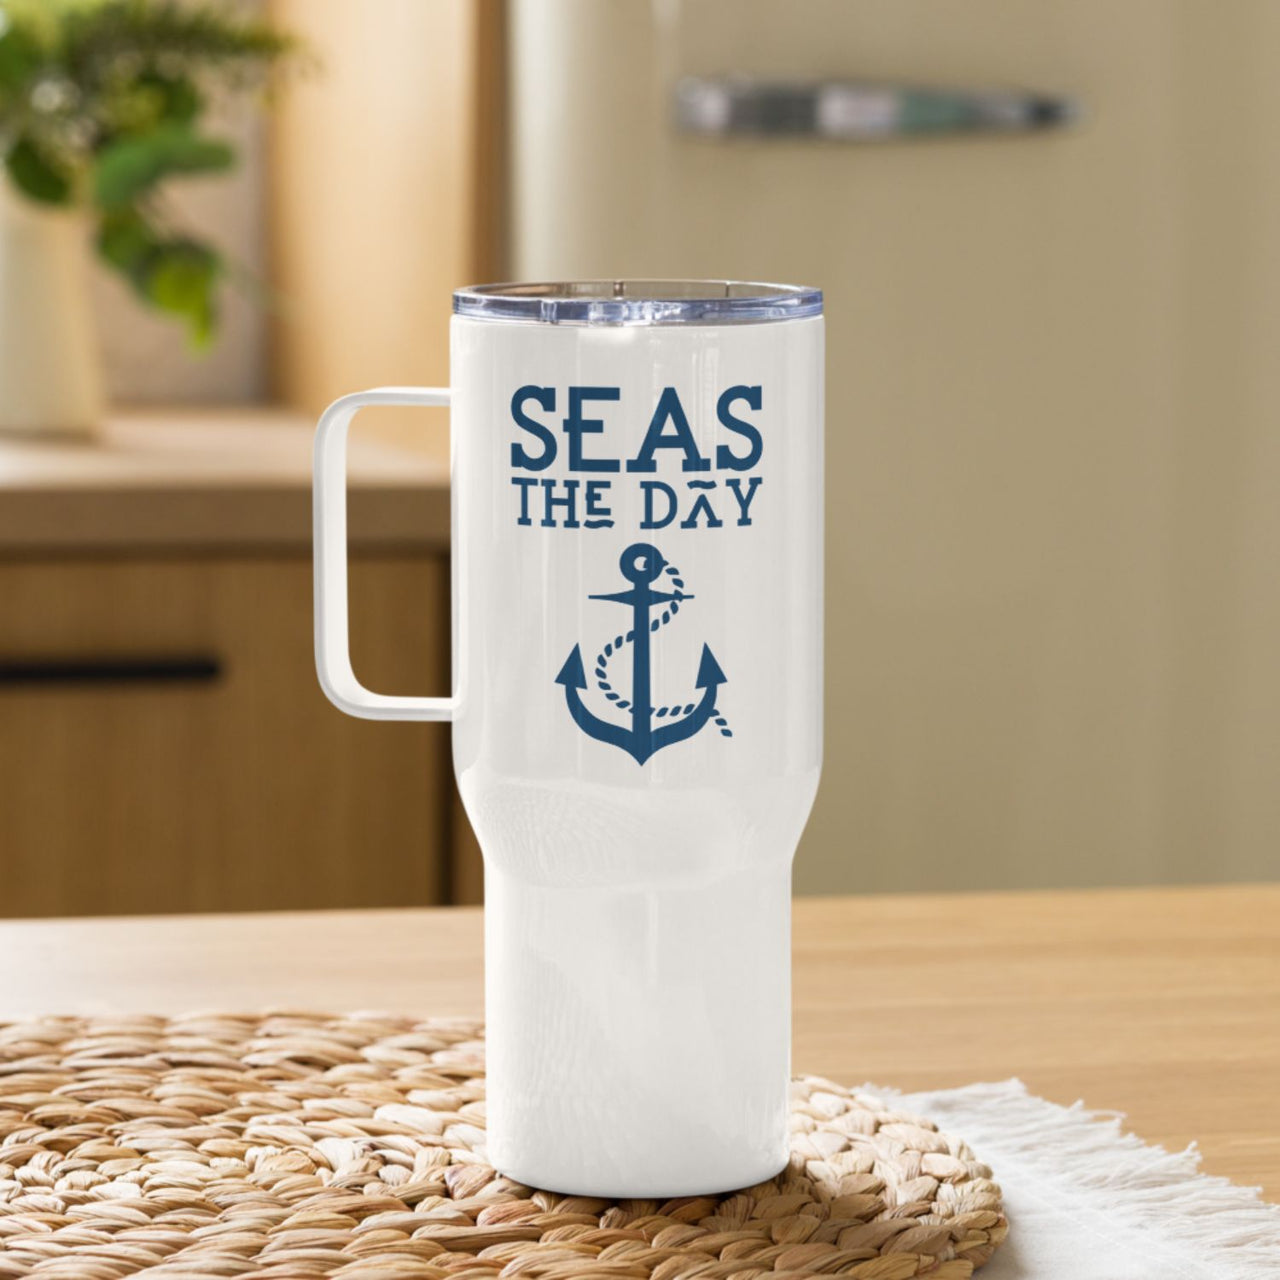 Seas The Day Travel Mug, Nautical Gift  New England Trading Co   